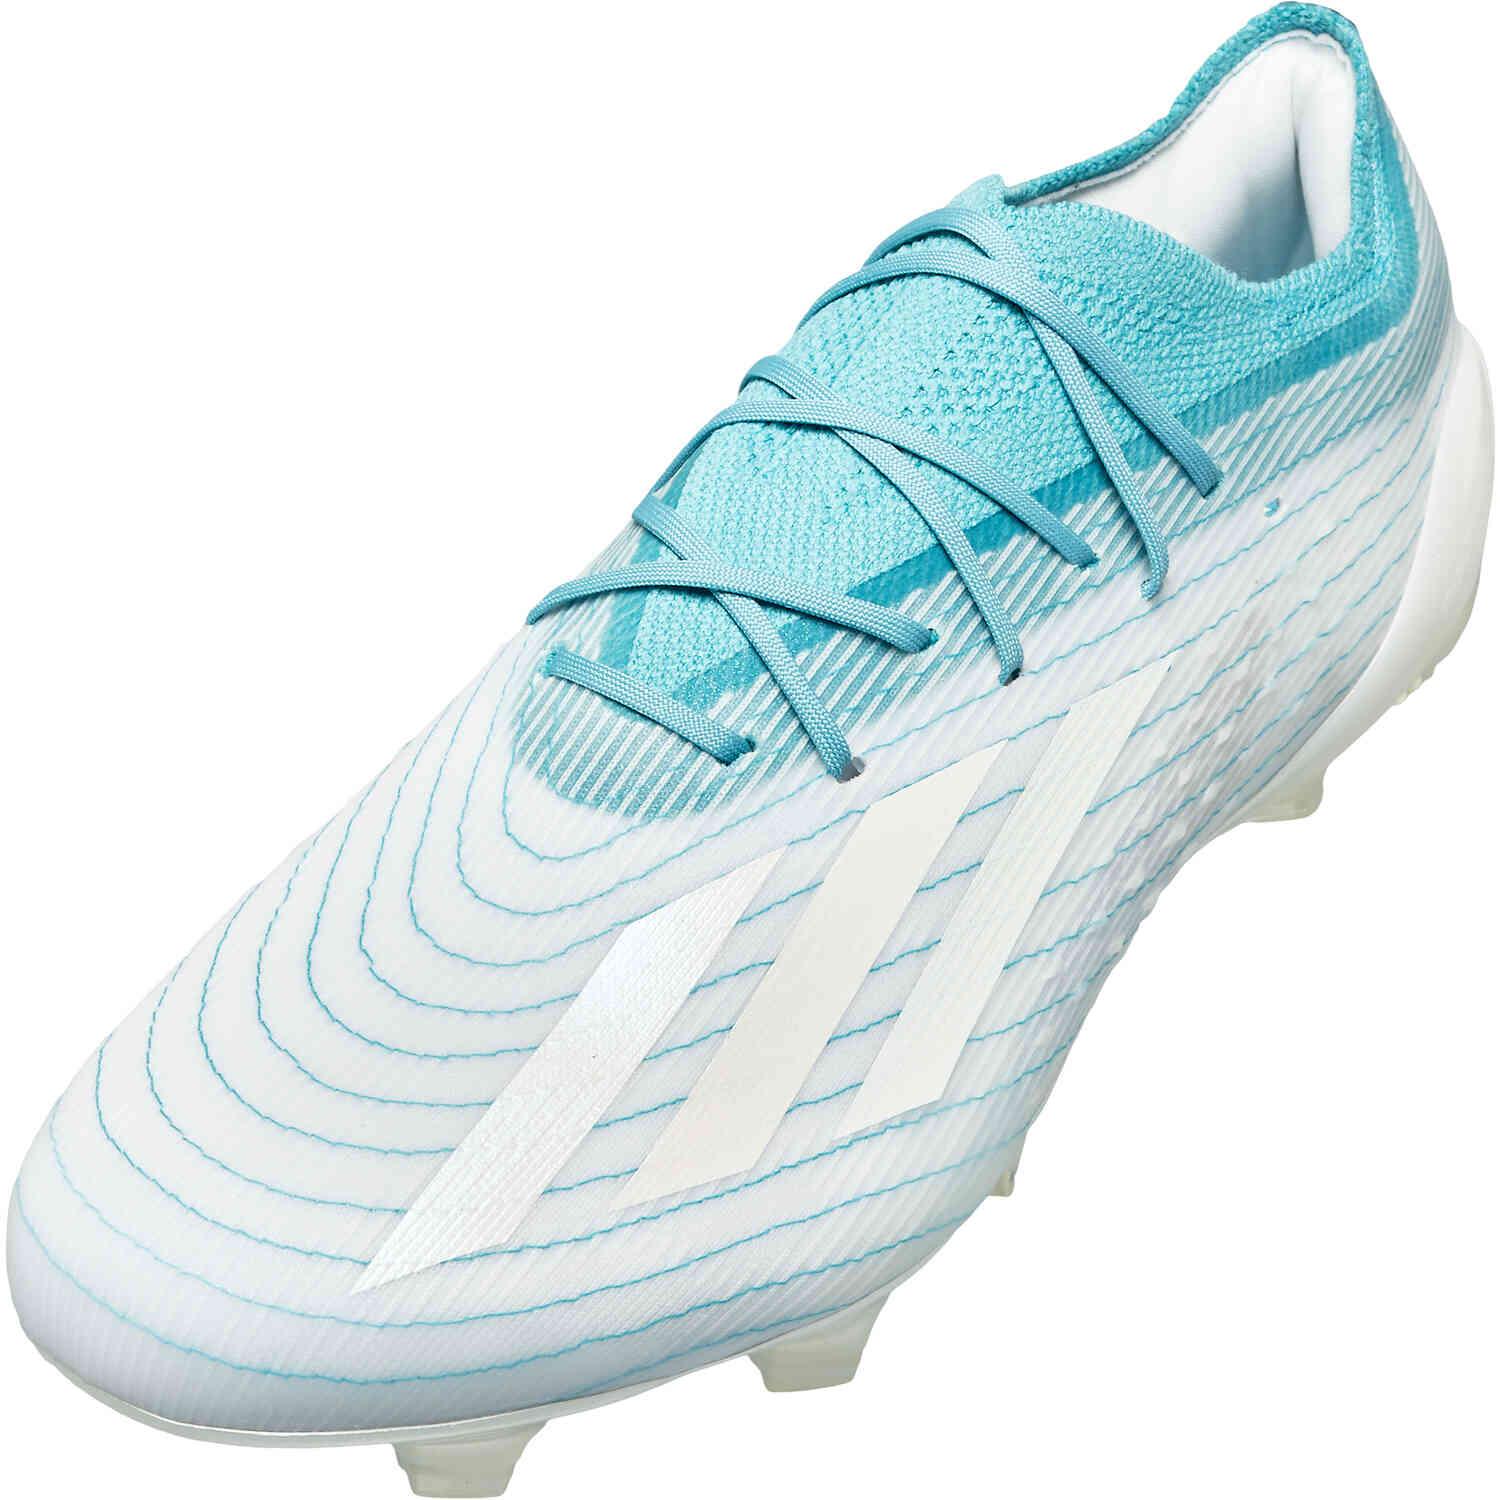 adidas Soccer Cleats adidas Football Boots SoccerPro